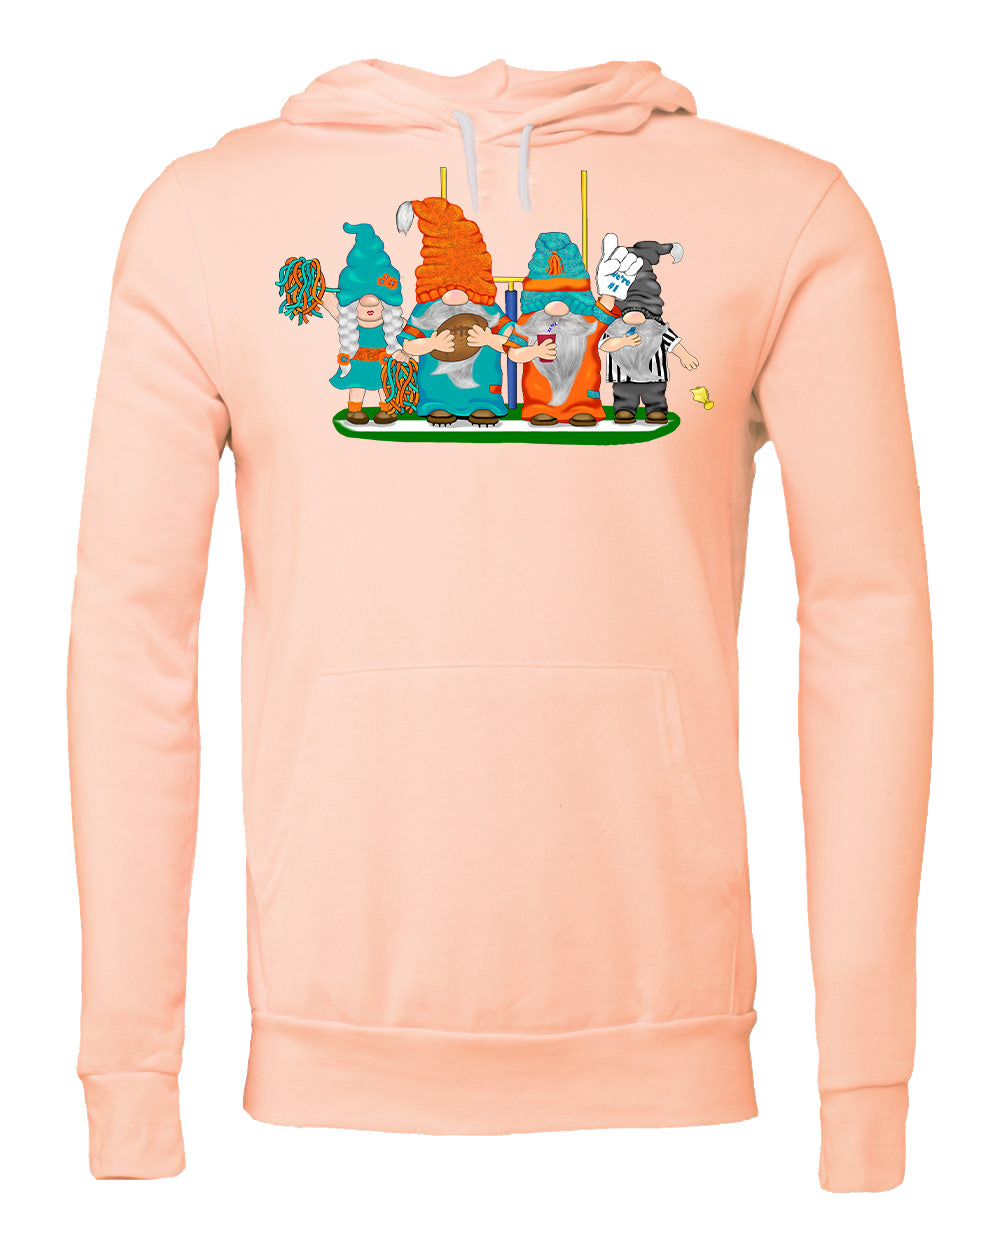 Aqua & Orange Football Gnomes (similar to Miami) on Unisex Hoodie